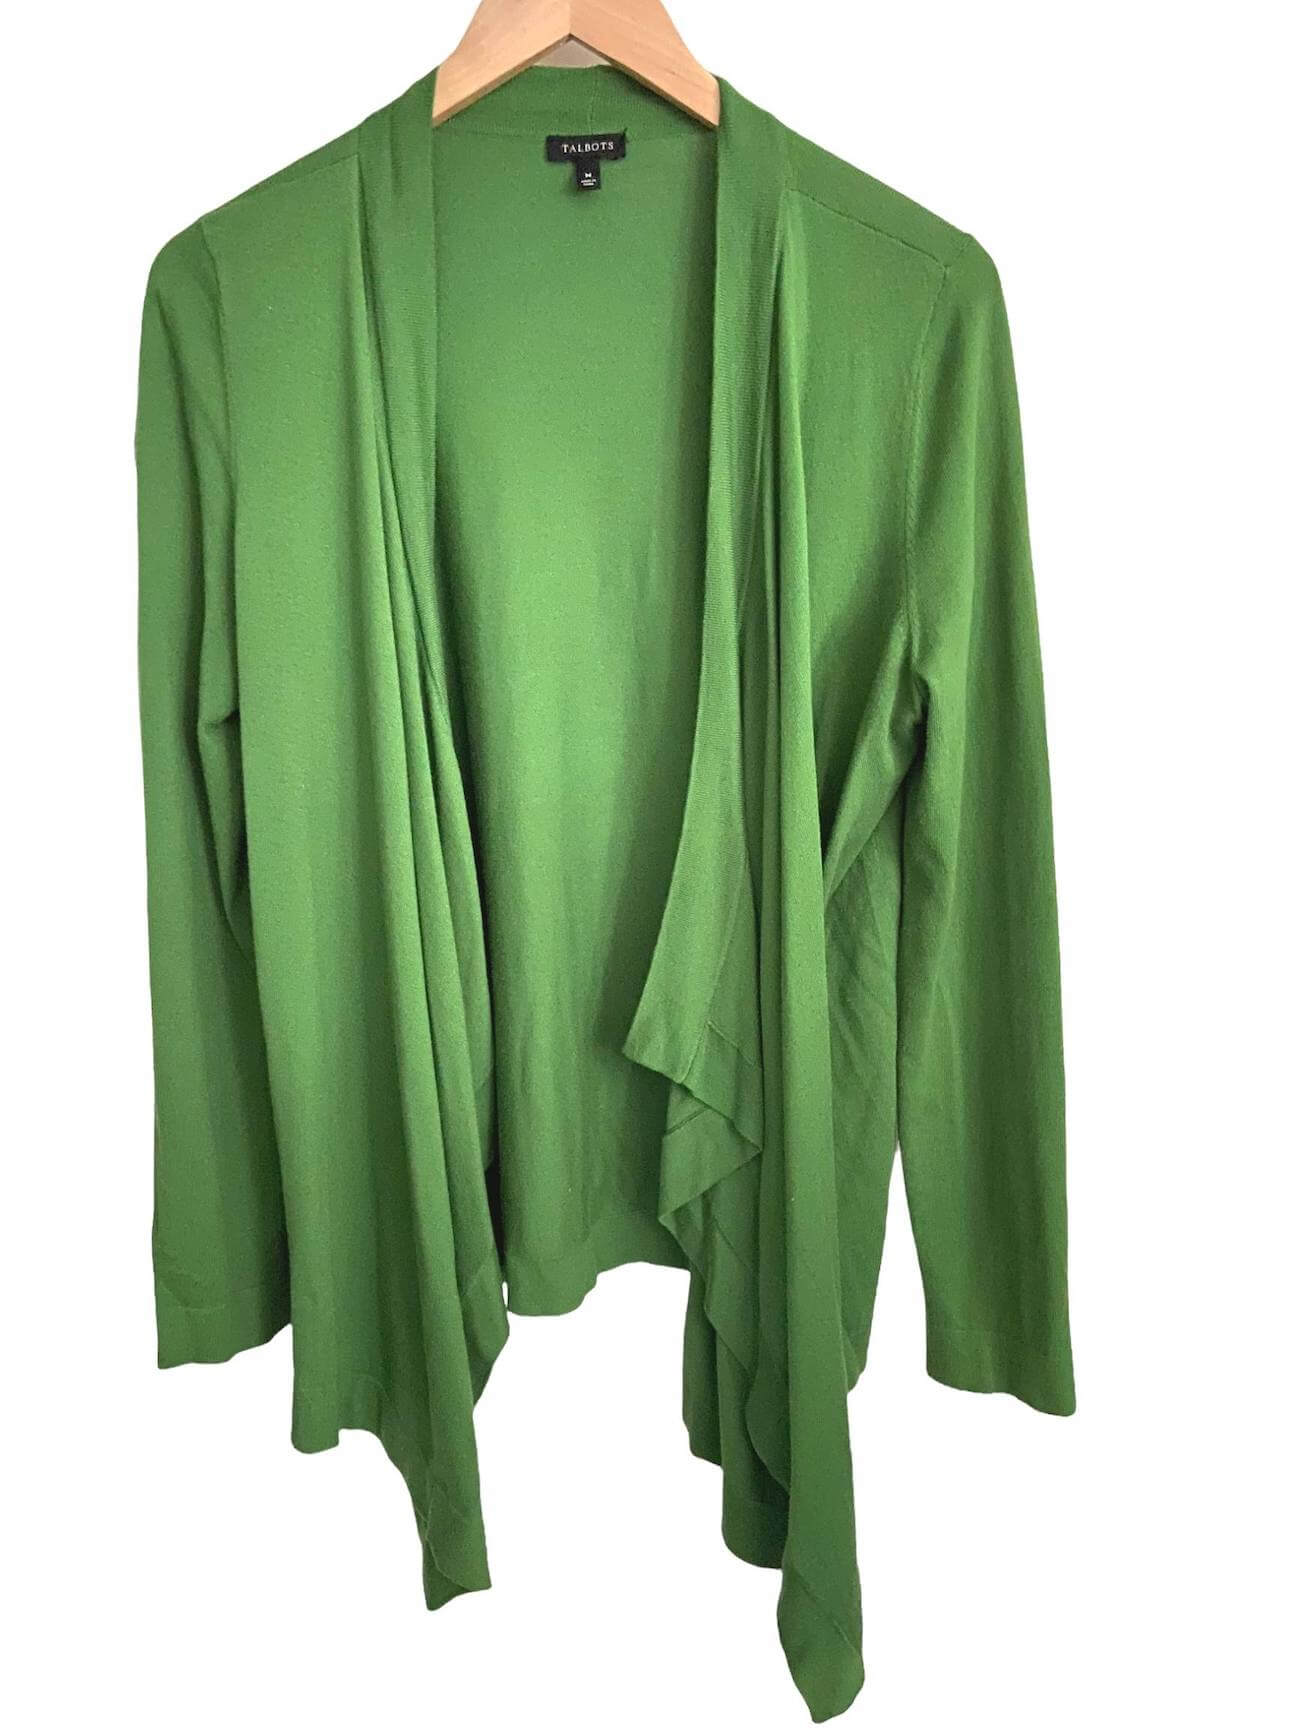 Dark Winter TALBOTS peacock green open cardigan sweater